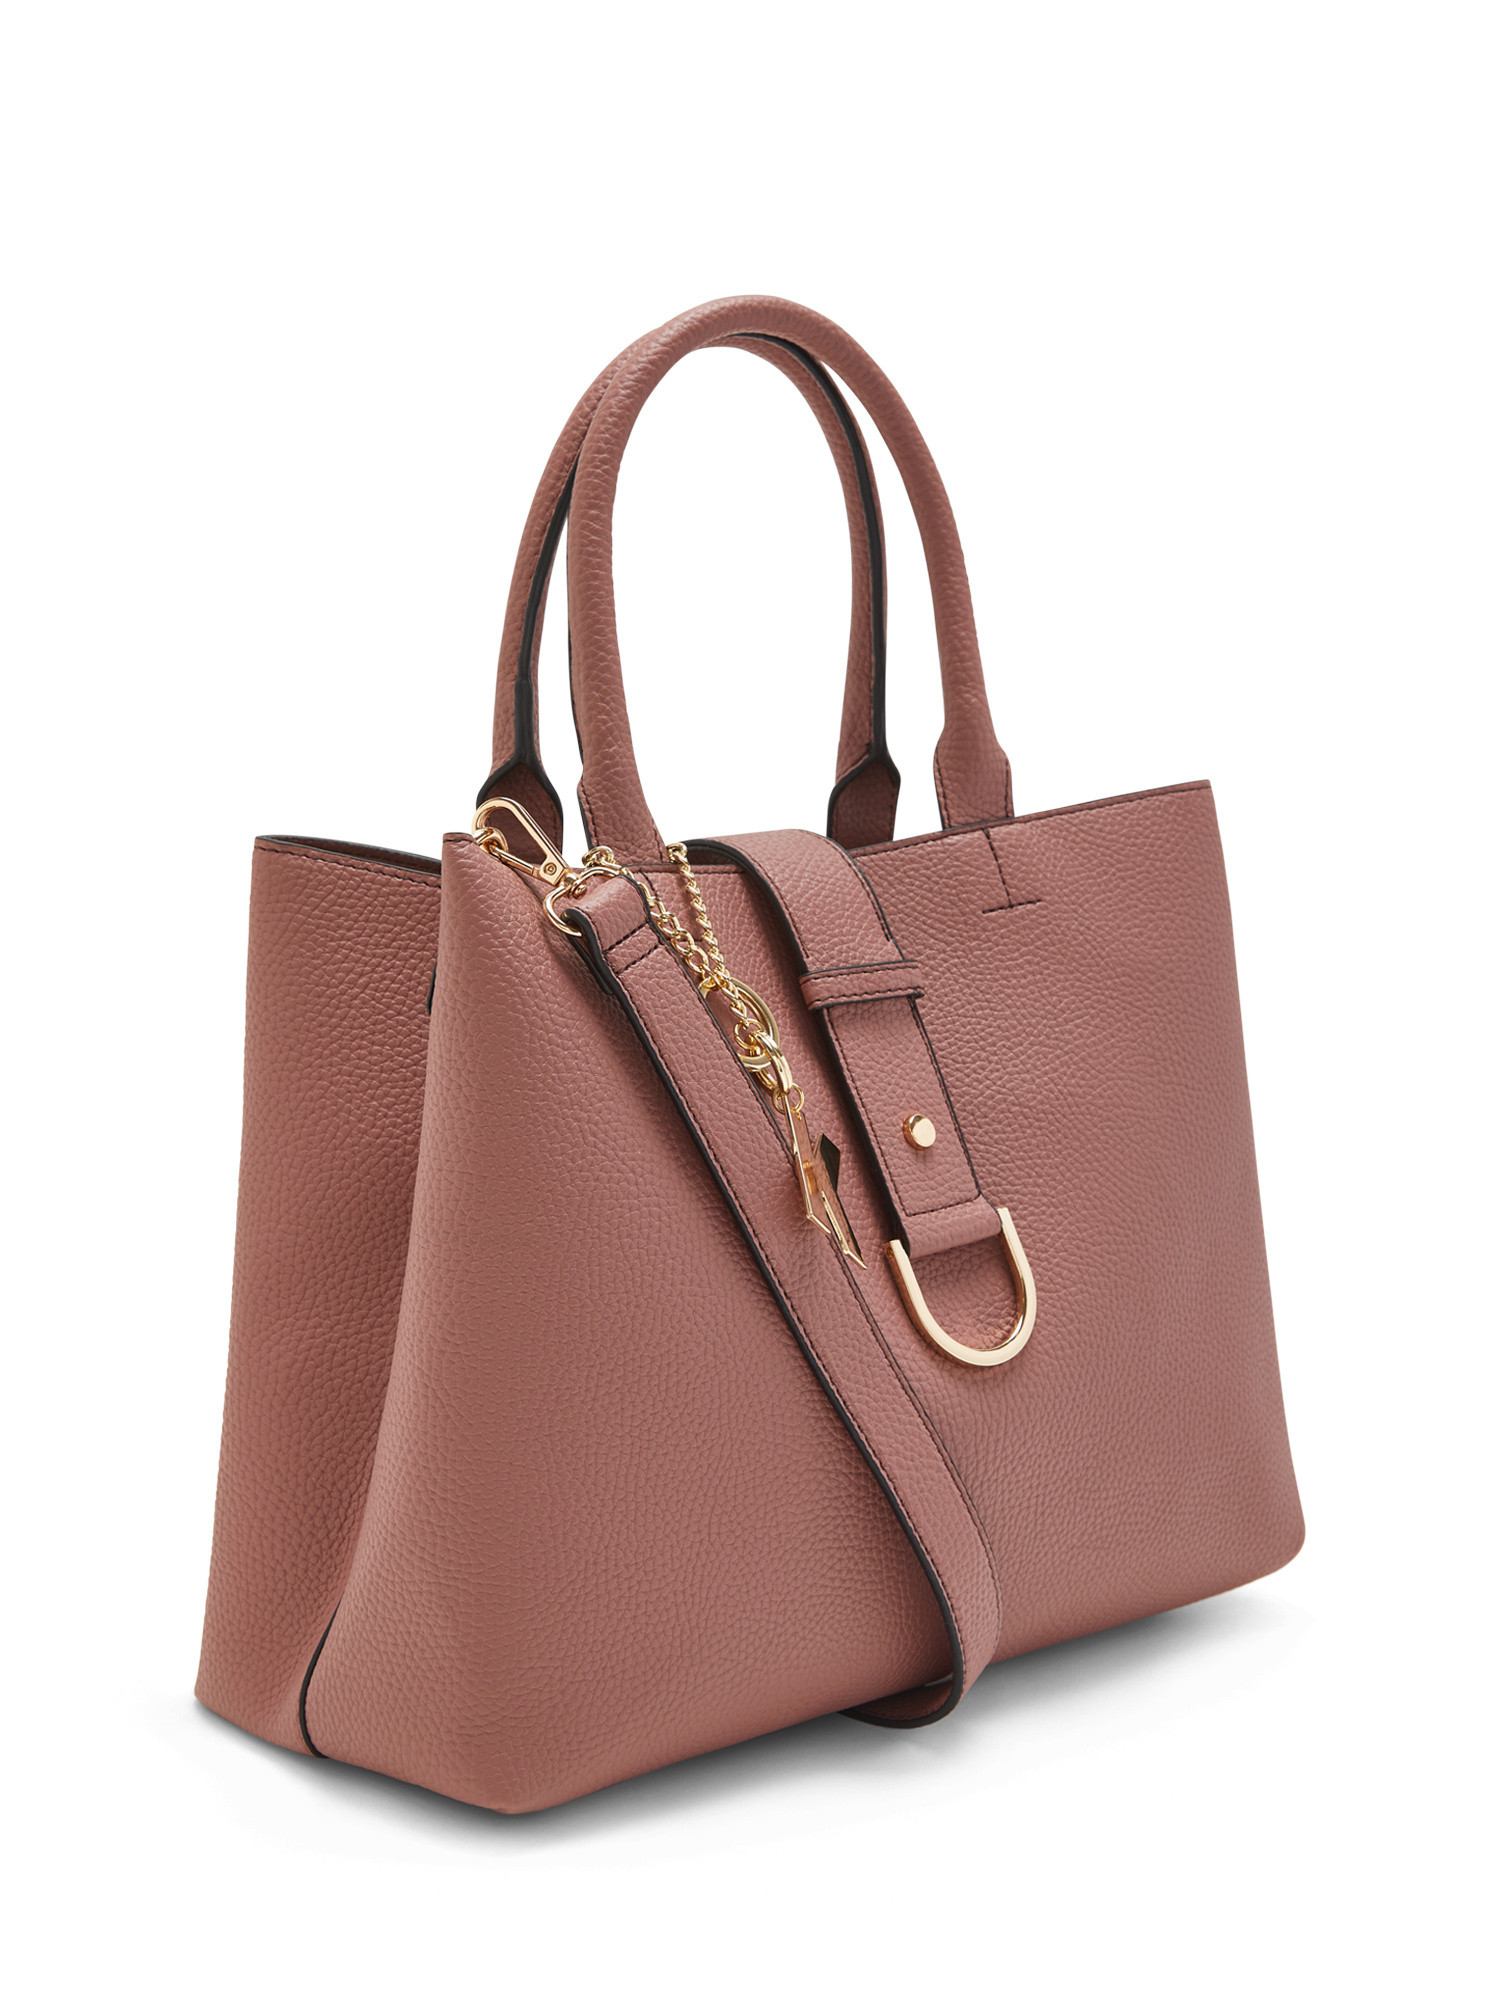 Koan - Shopping bag with charm, Dark Pink, large image number 1